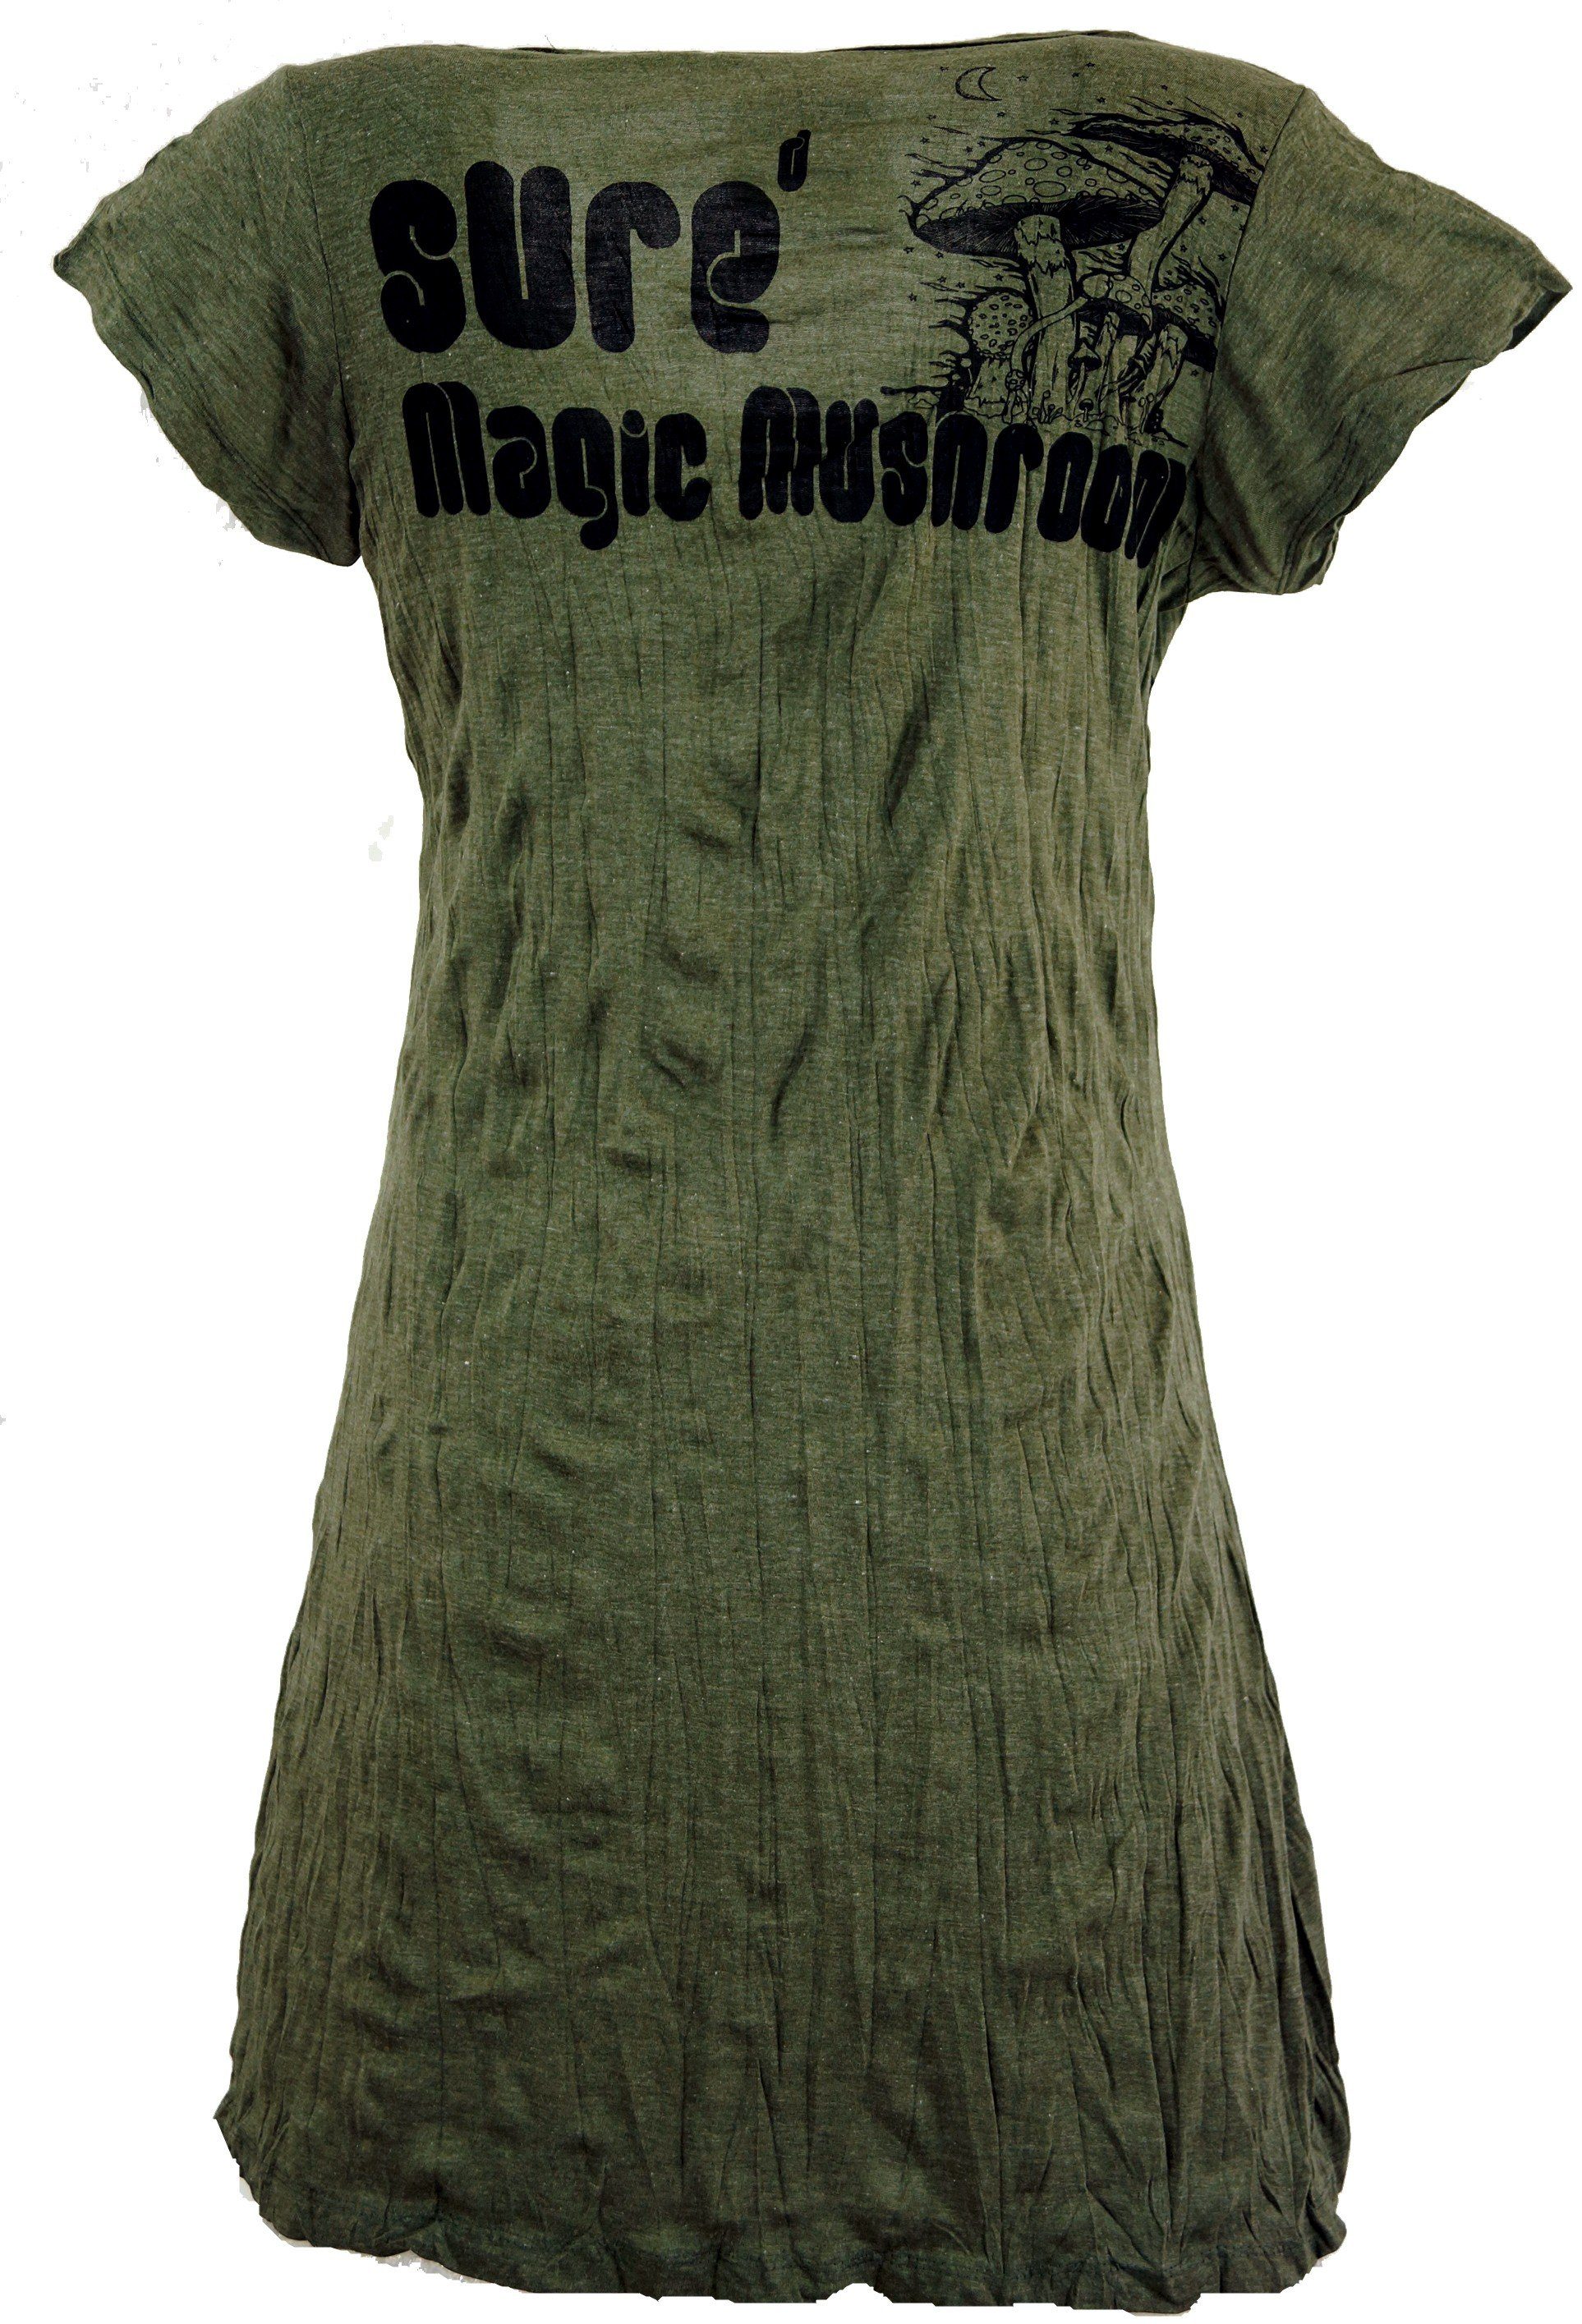 Guru-Shop T-Shirt Sure - Bekleidung Festival, Long Style, Shirt, Goa Magic Mushroom Minikleid alternative olive